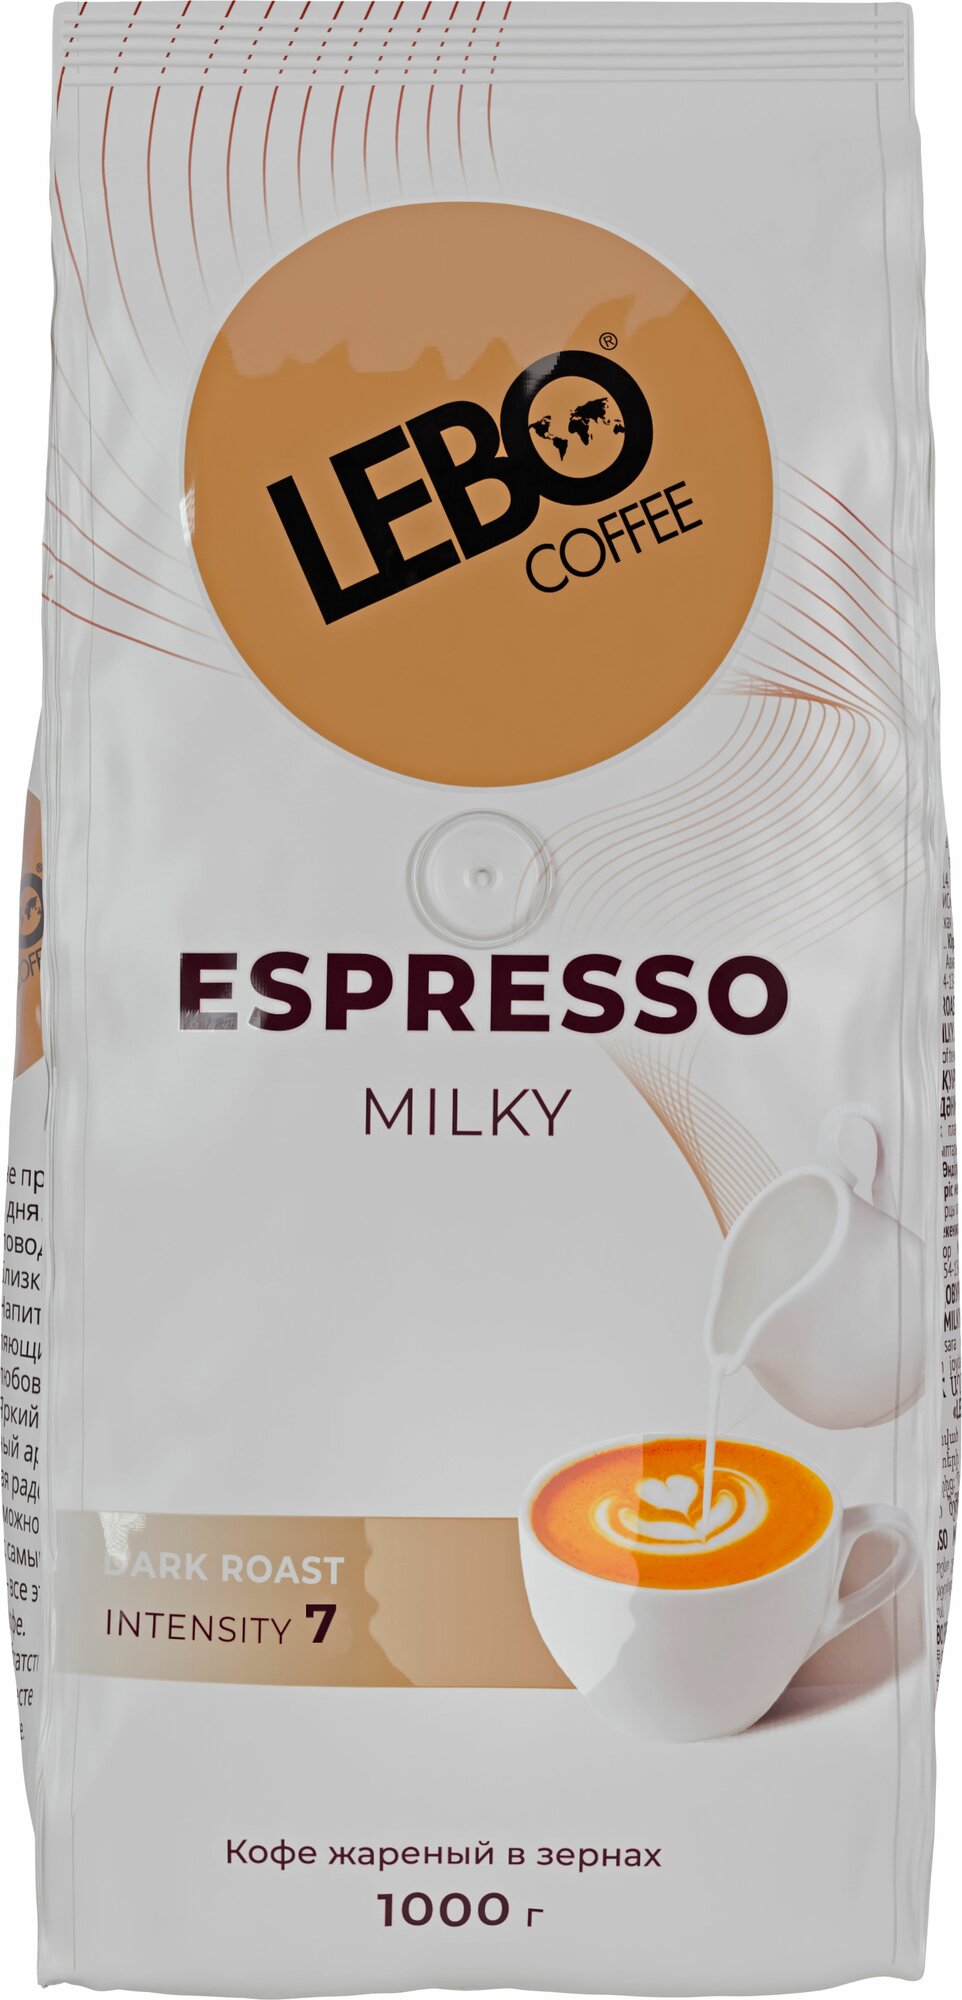 Кофе в зернах Lebo ESPRESSO MILKY 1 кг